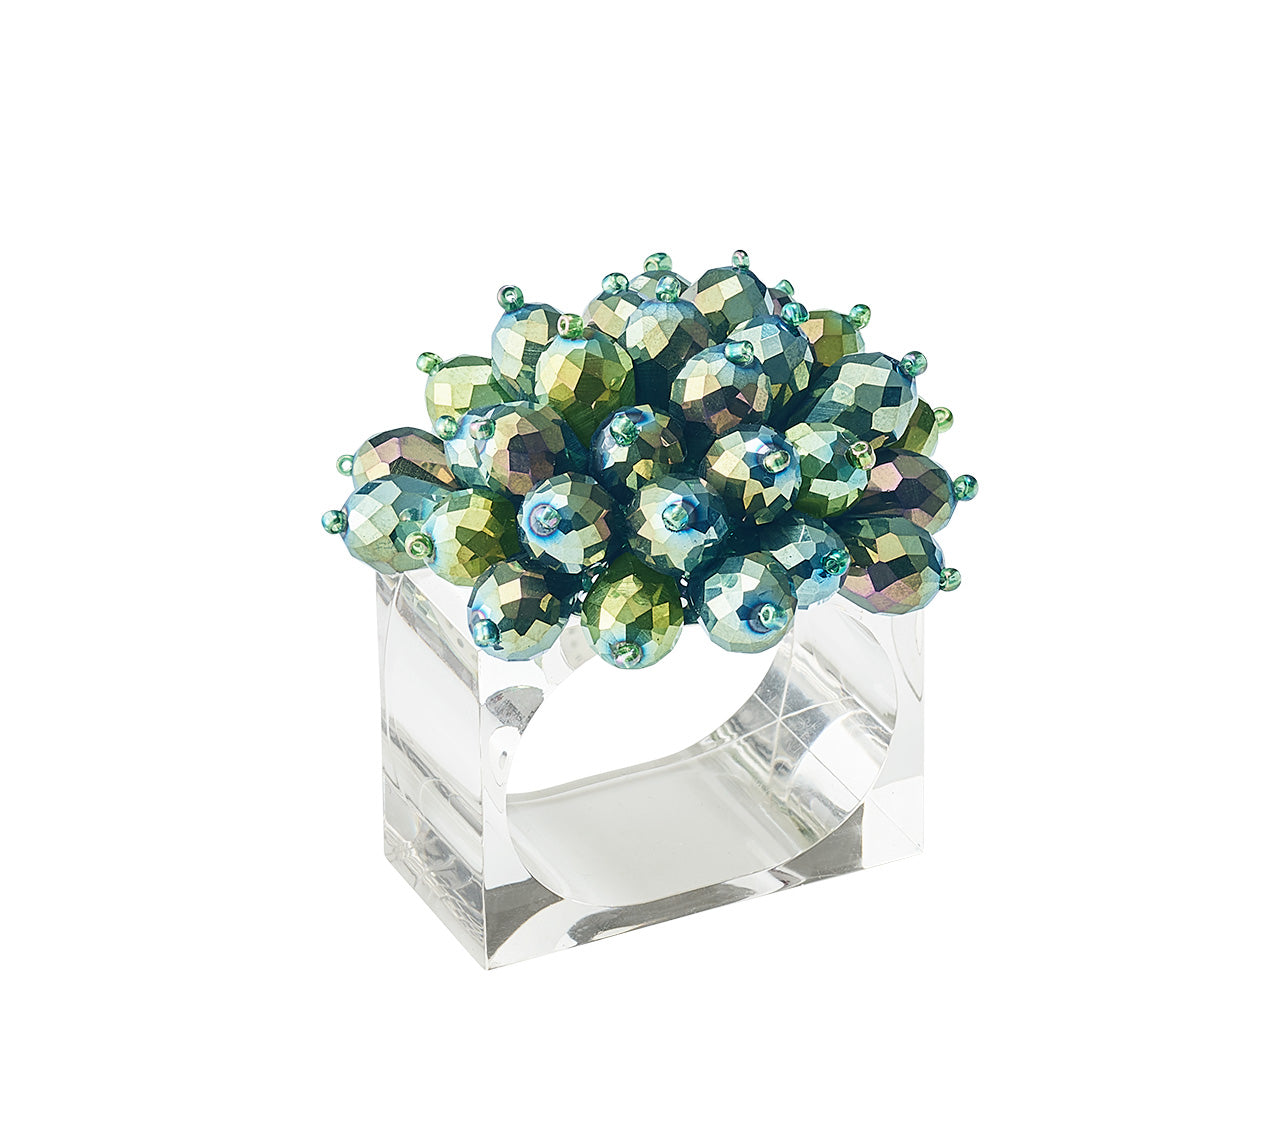 Kim Seybert Luxury Zinnia Napkin Ring in Olive & Green